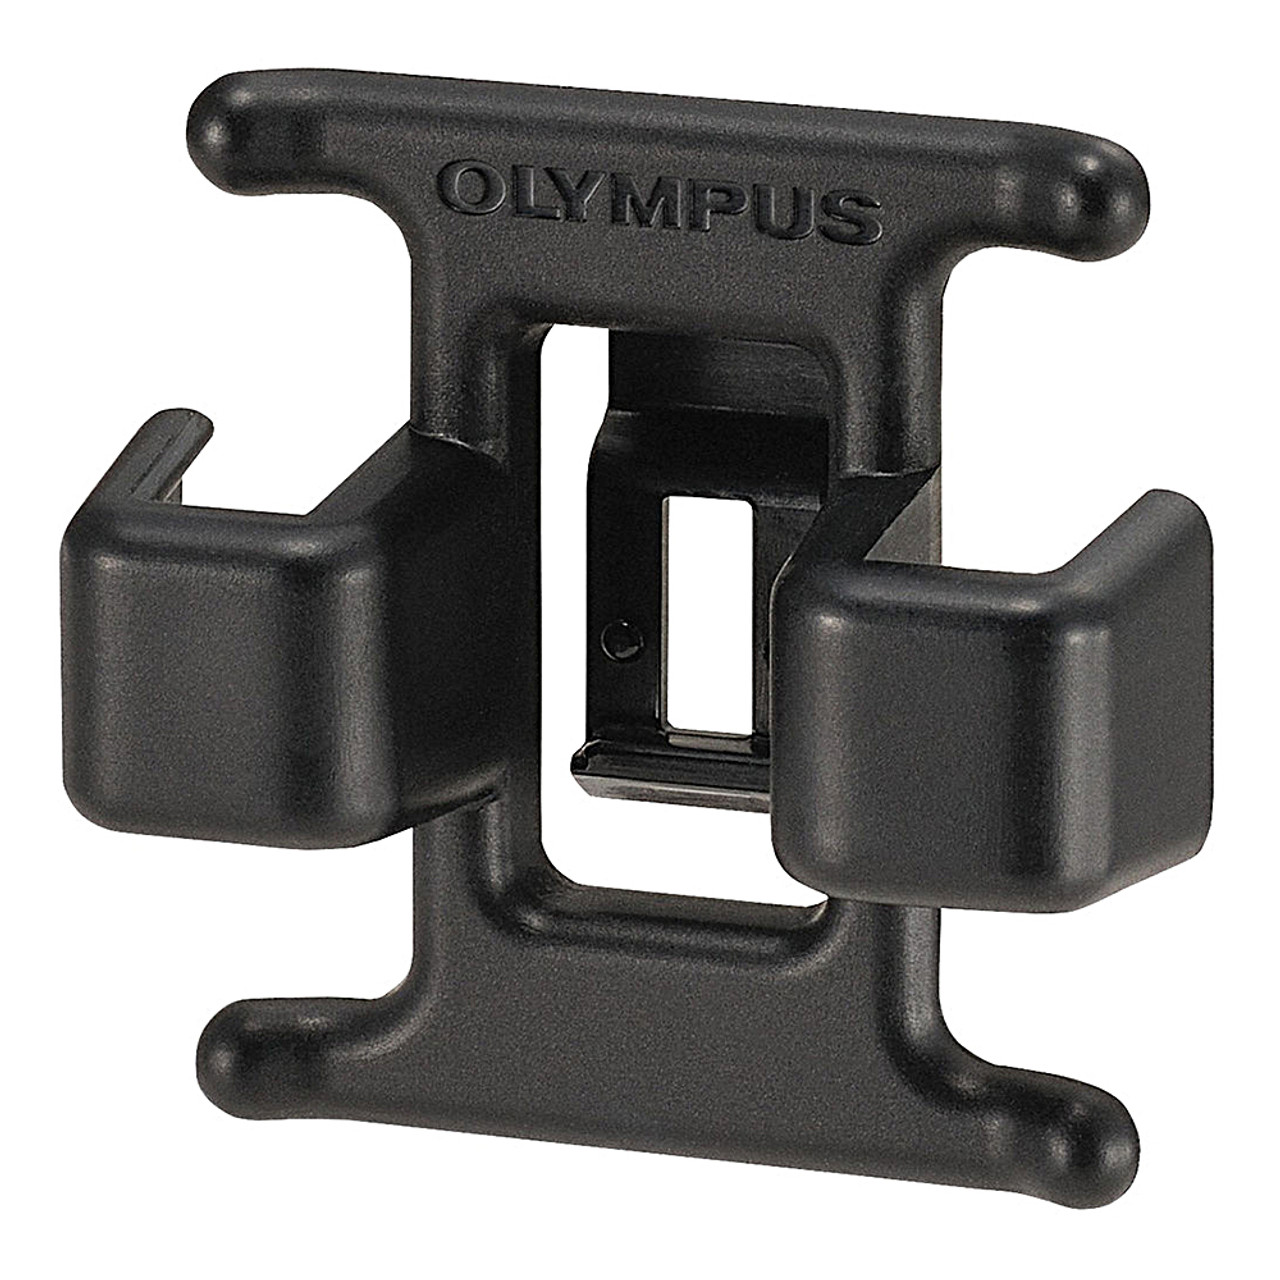 OLYMPUS CC-1 USB CABLE HOLDER